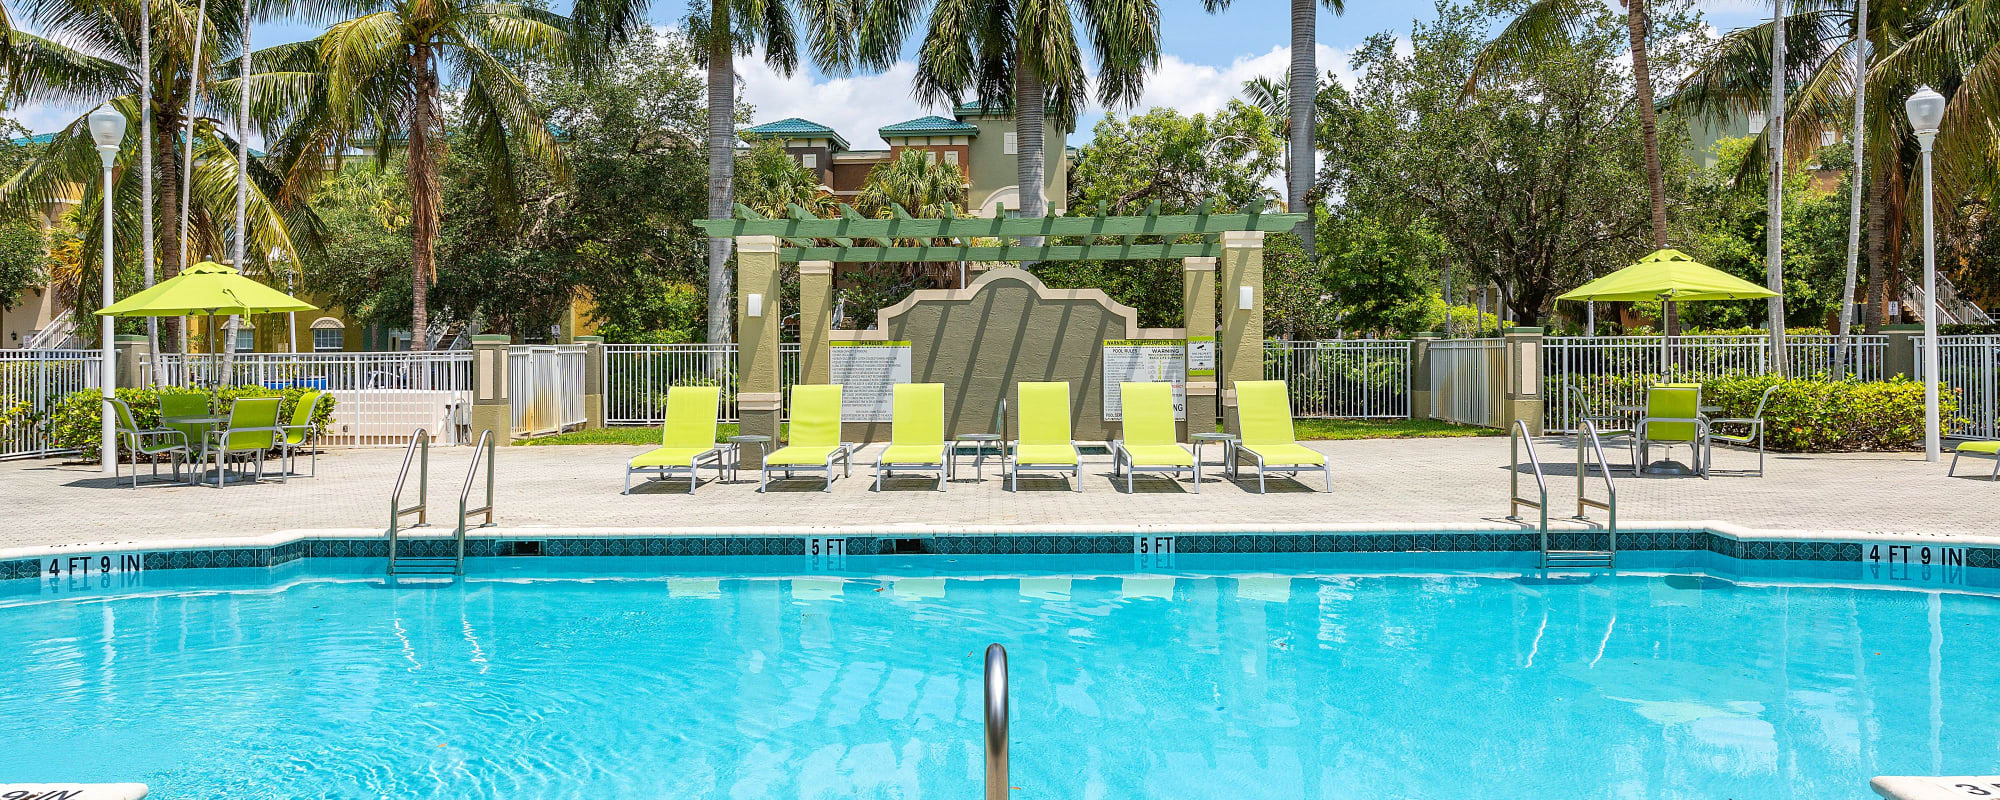 Apartments at Quantum Lake Villas Apartments in Boynton Beach, Florida